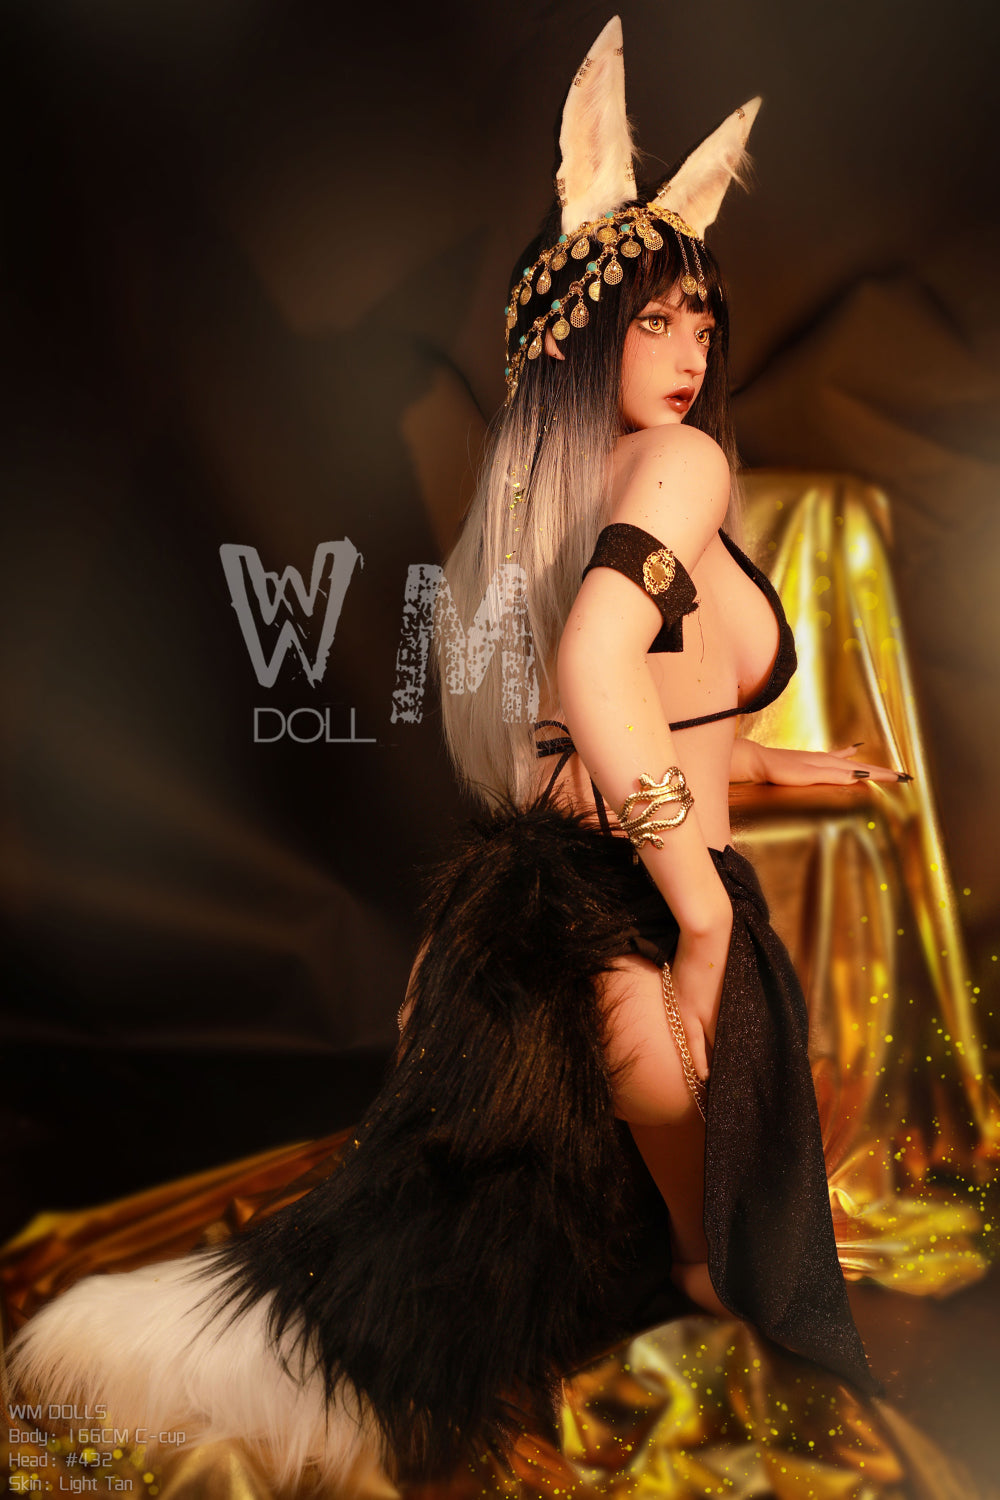 WM DOLL 166 CM C TPE - Celestia | Buy Sex Dolls at DOLLS ACTUALLY